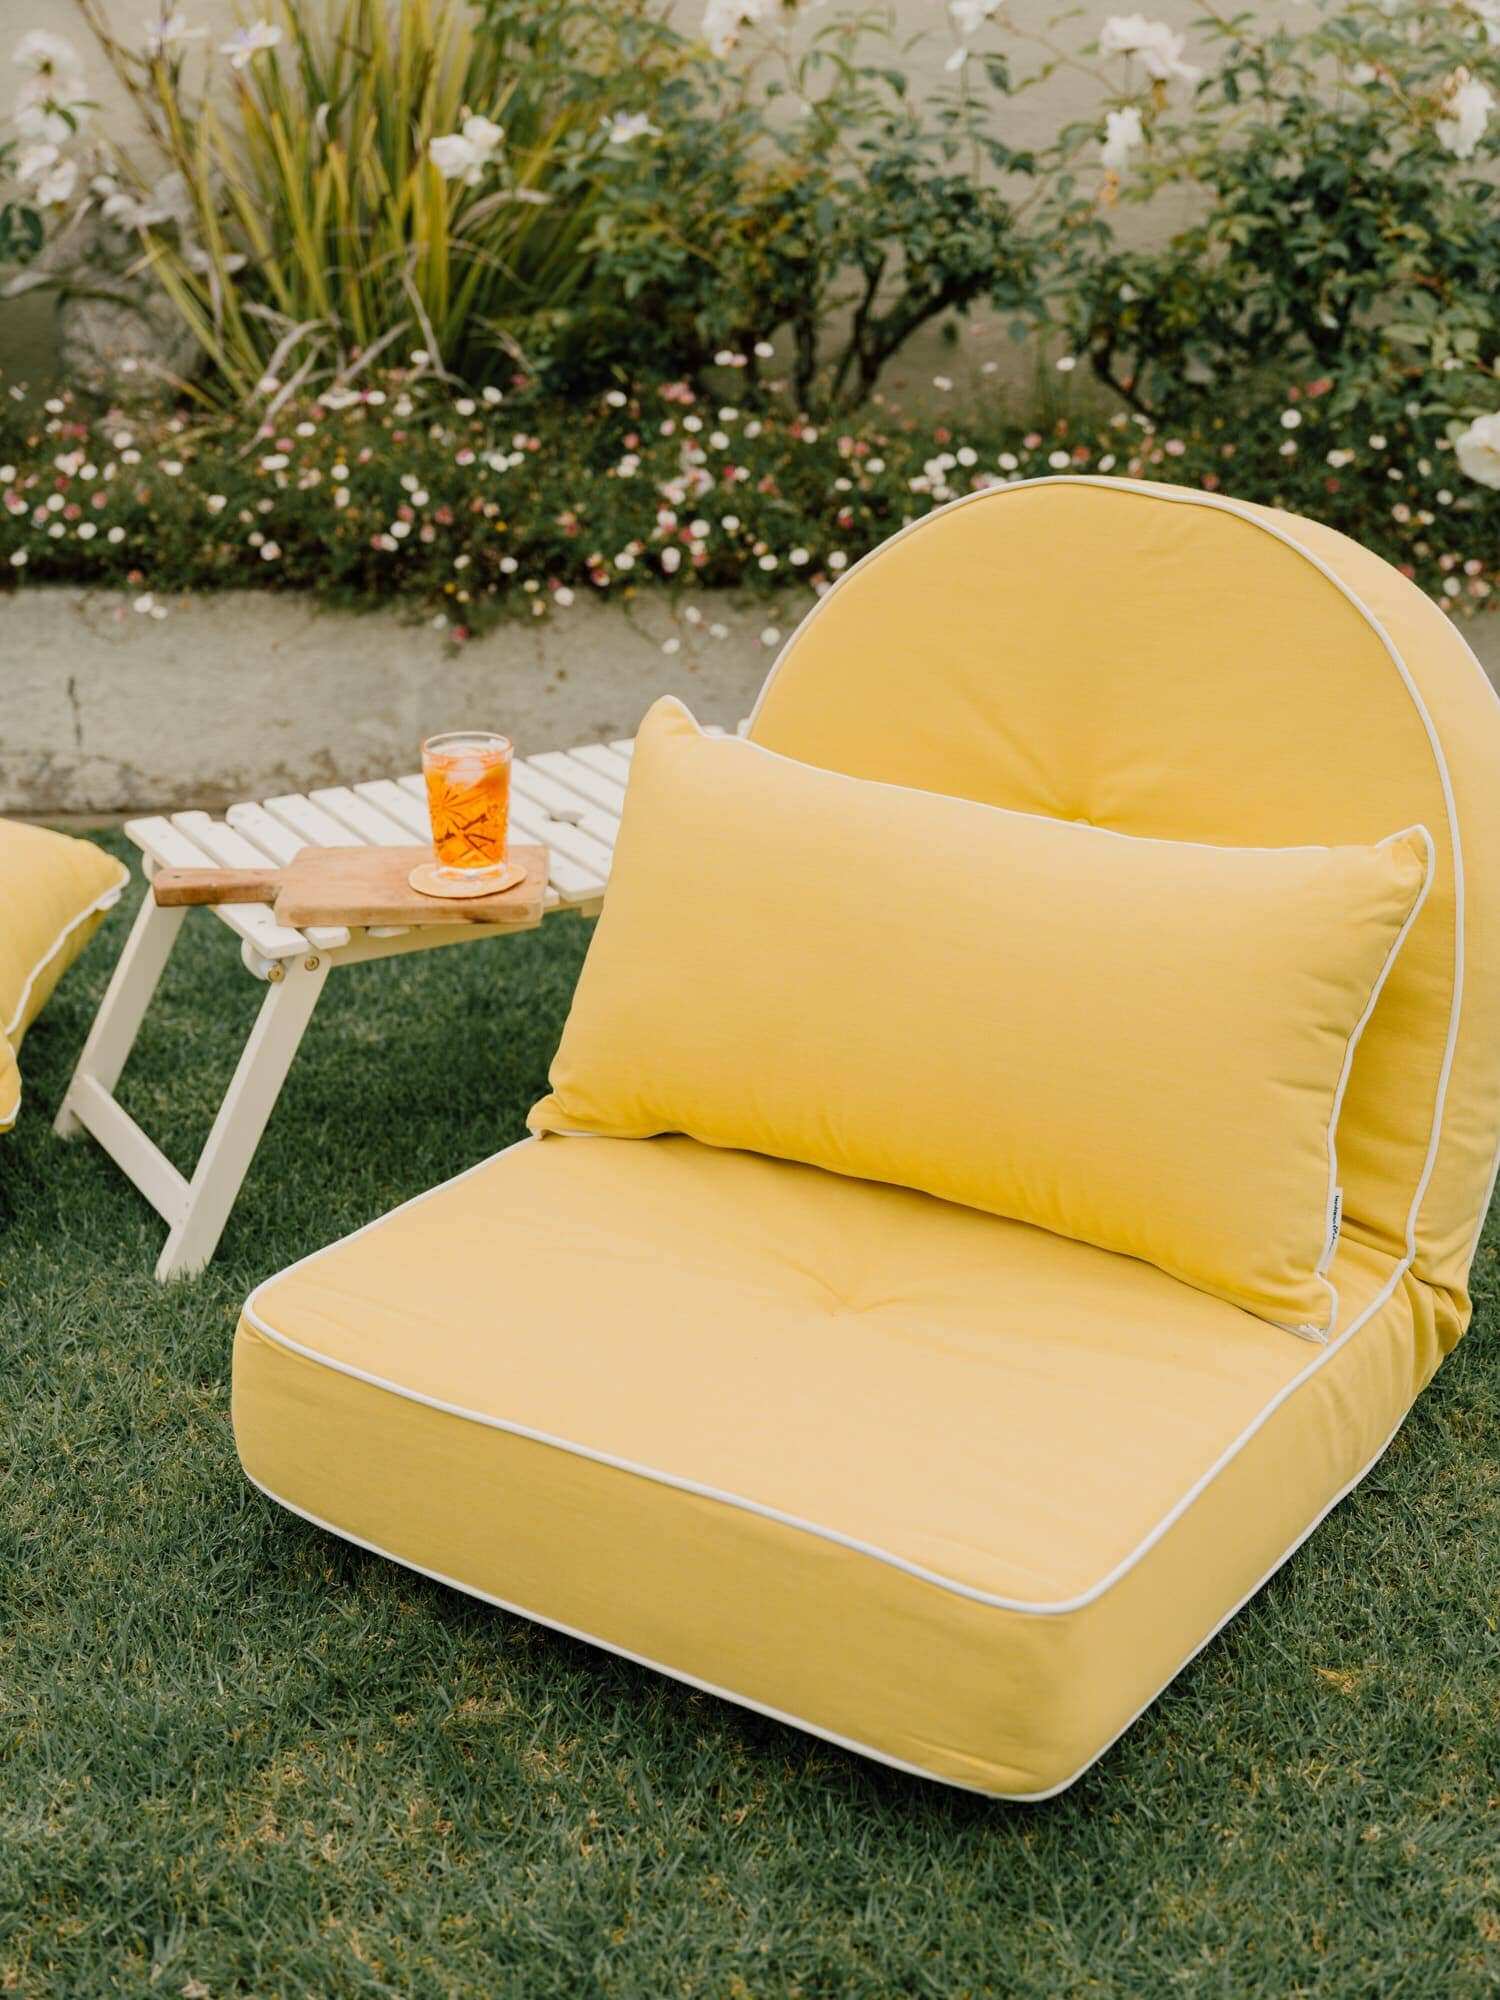 Riviera mimosa reclining lounger in a garden setting